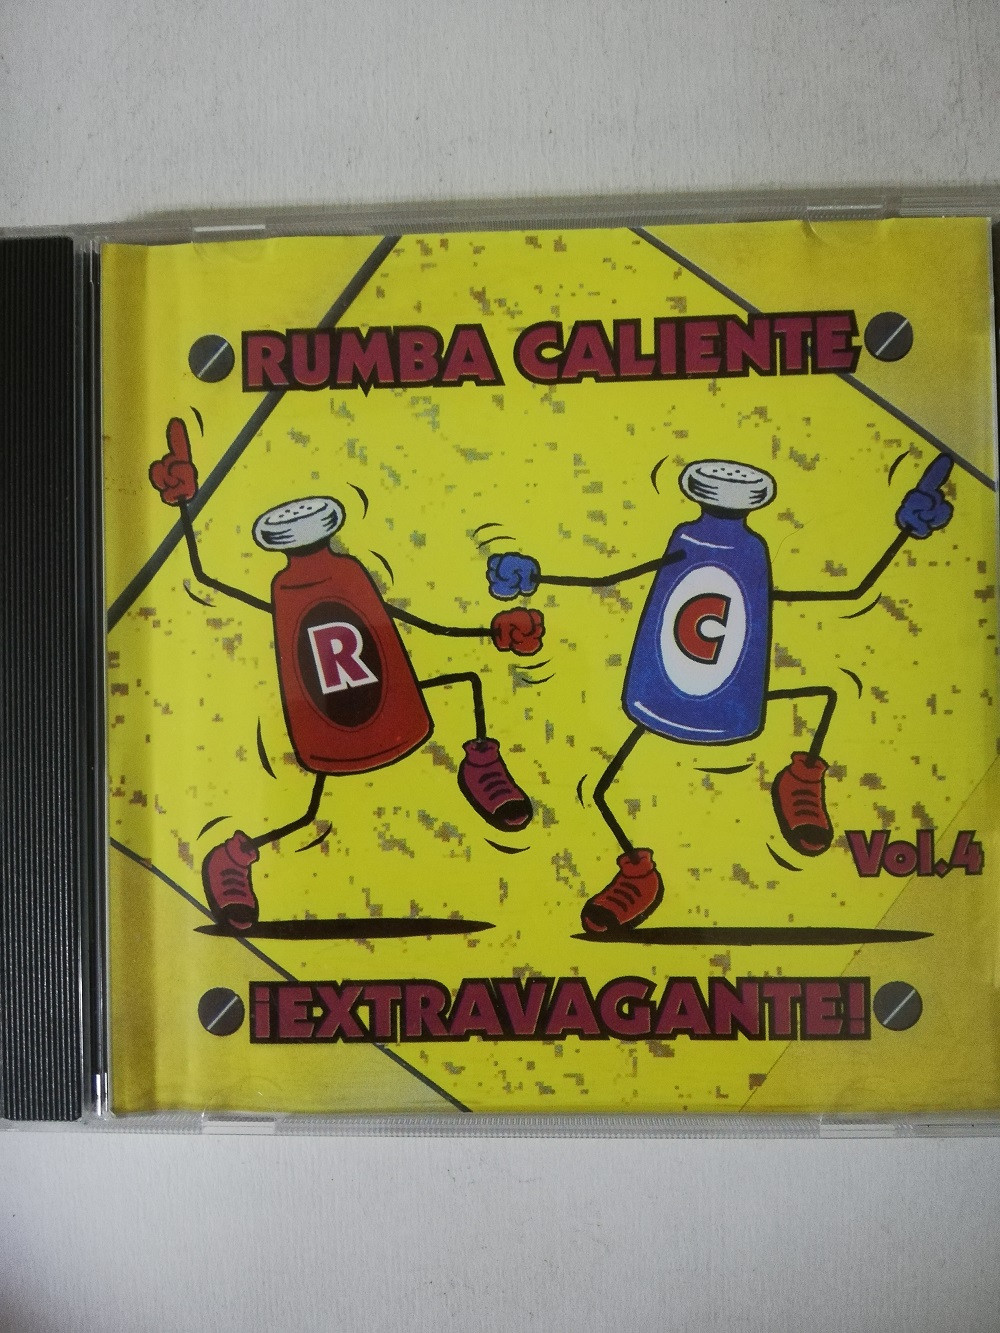 Imagen CD RUMBA CALIENTE - EXTRAVAGANTE VOL. 4 1